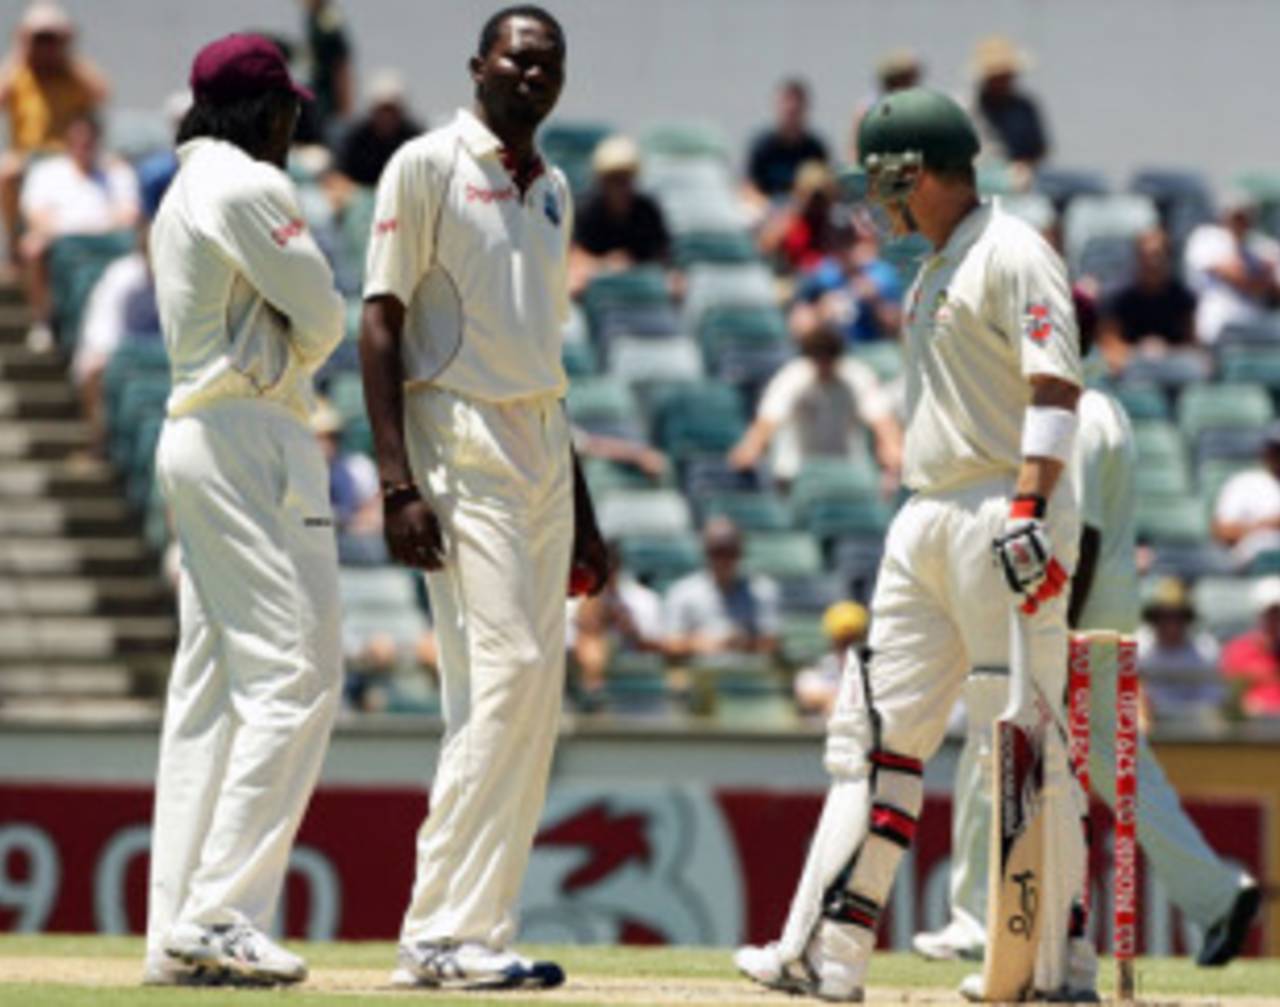 Sulieman Benn and Brad Haddin exchange stares and words, Australia v West Indies, 2nd Test, Perth, 17 December, 2009